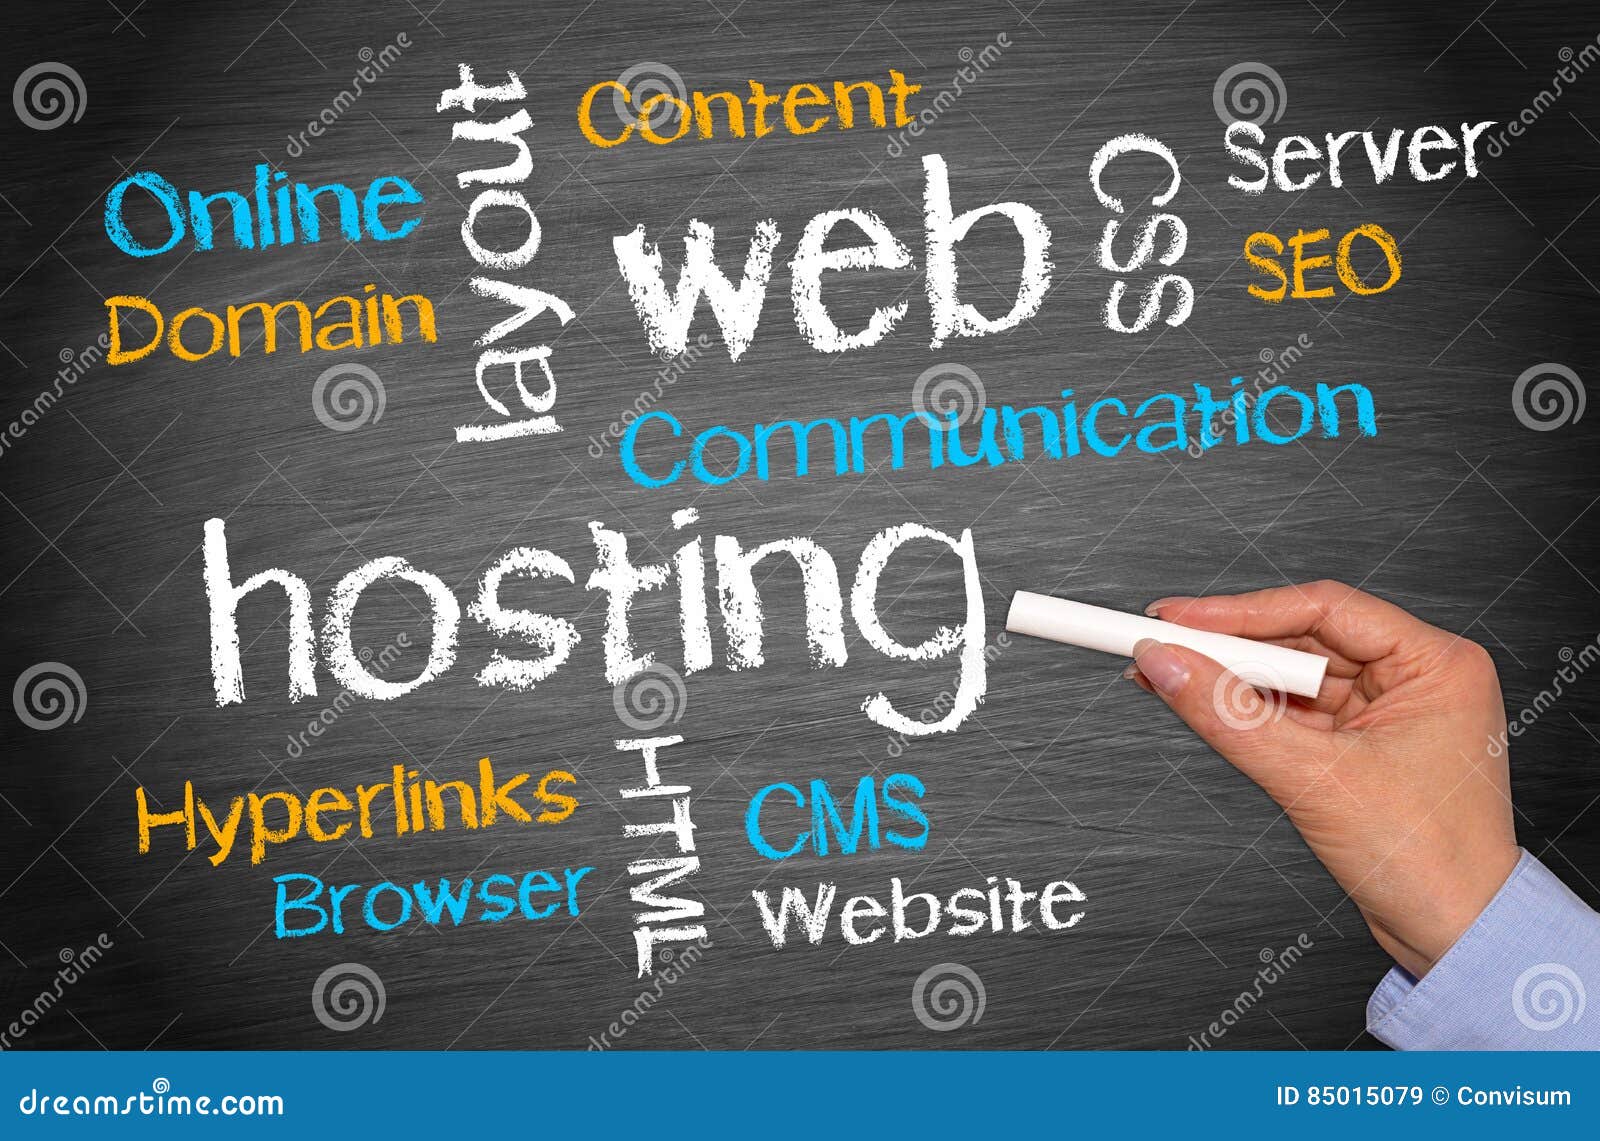 web hosting business concept